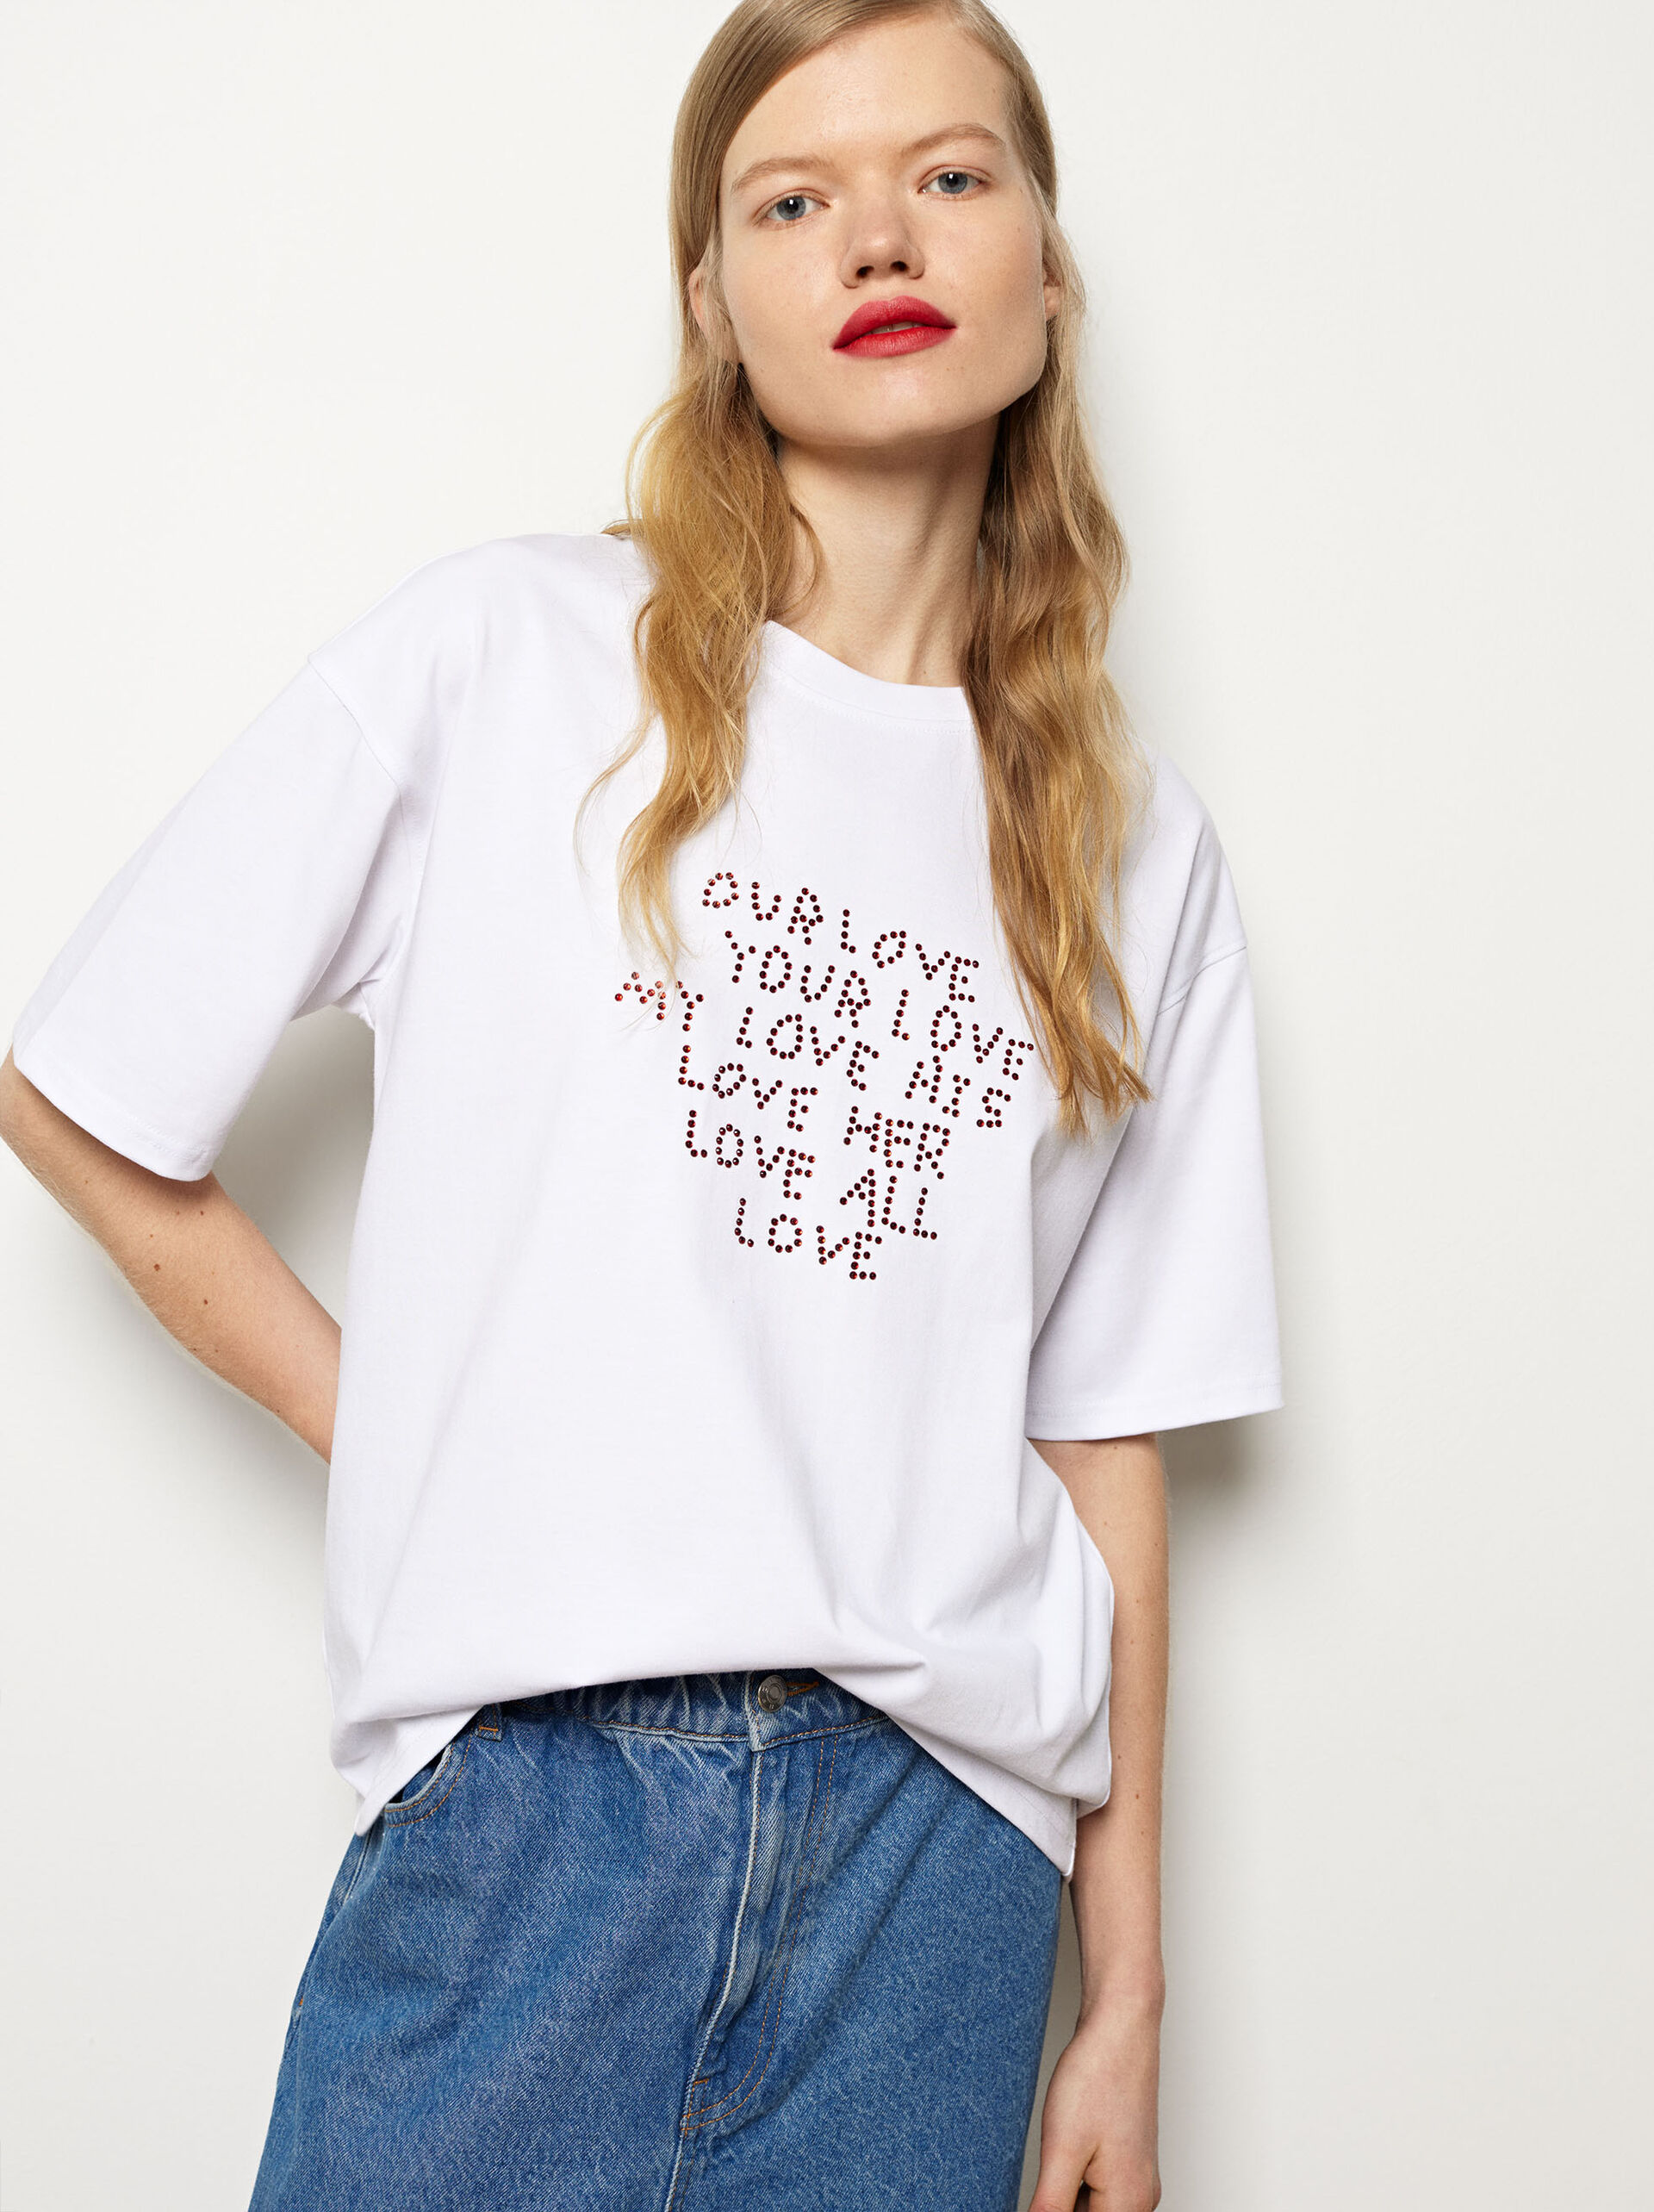 Online Exclusive - T-Shirt Aus Baumwolle Love image number 0.0